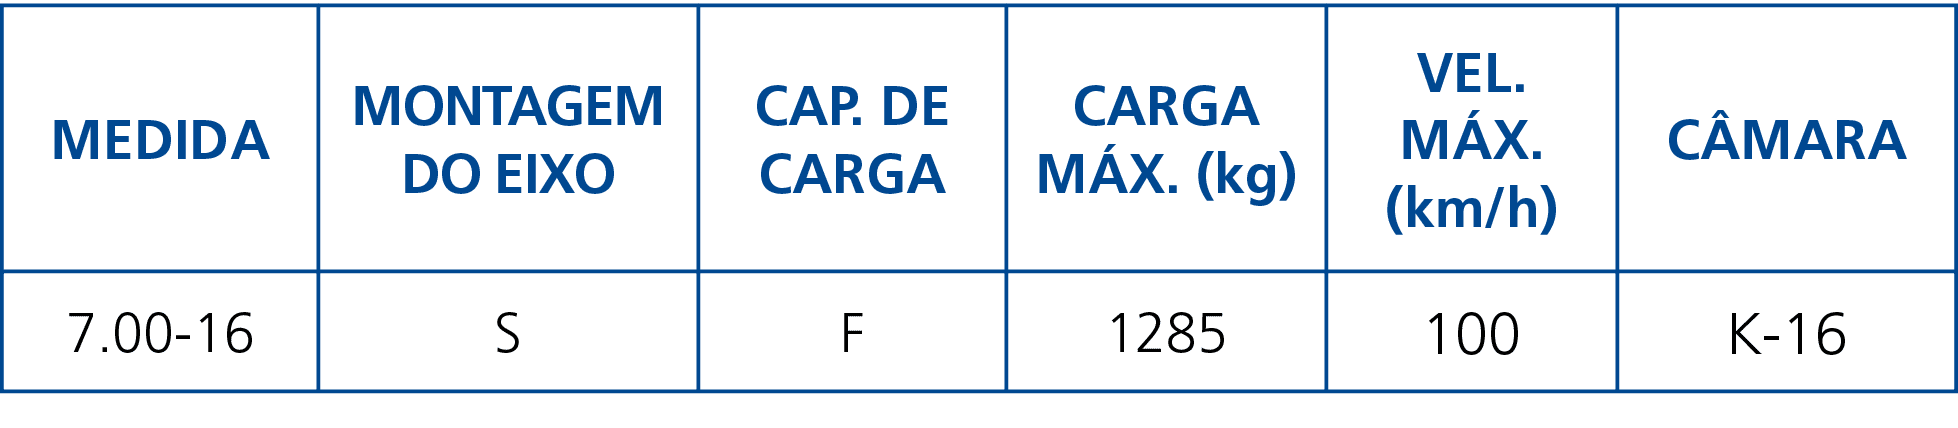 Medida,Montagem do Eixo,Cap  de Carga,Carga Máx  (kg),Vel  Máx  (km h),Câmara,7 00-16,S,F,1285,100,K-16